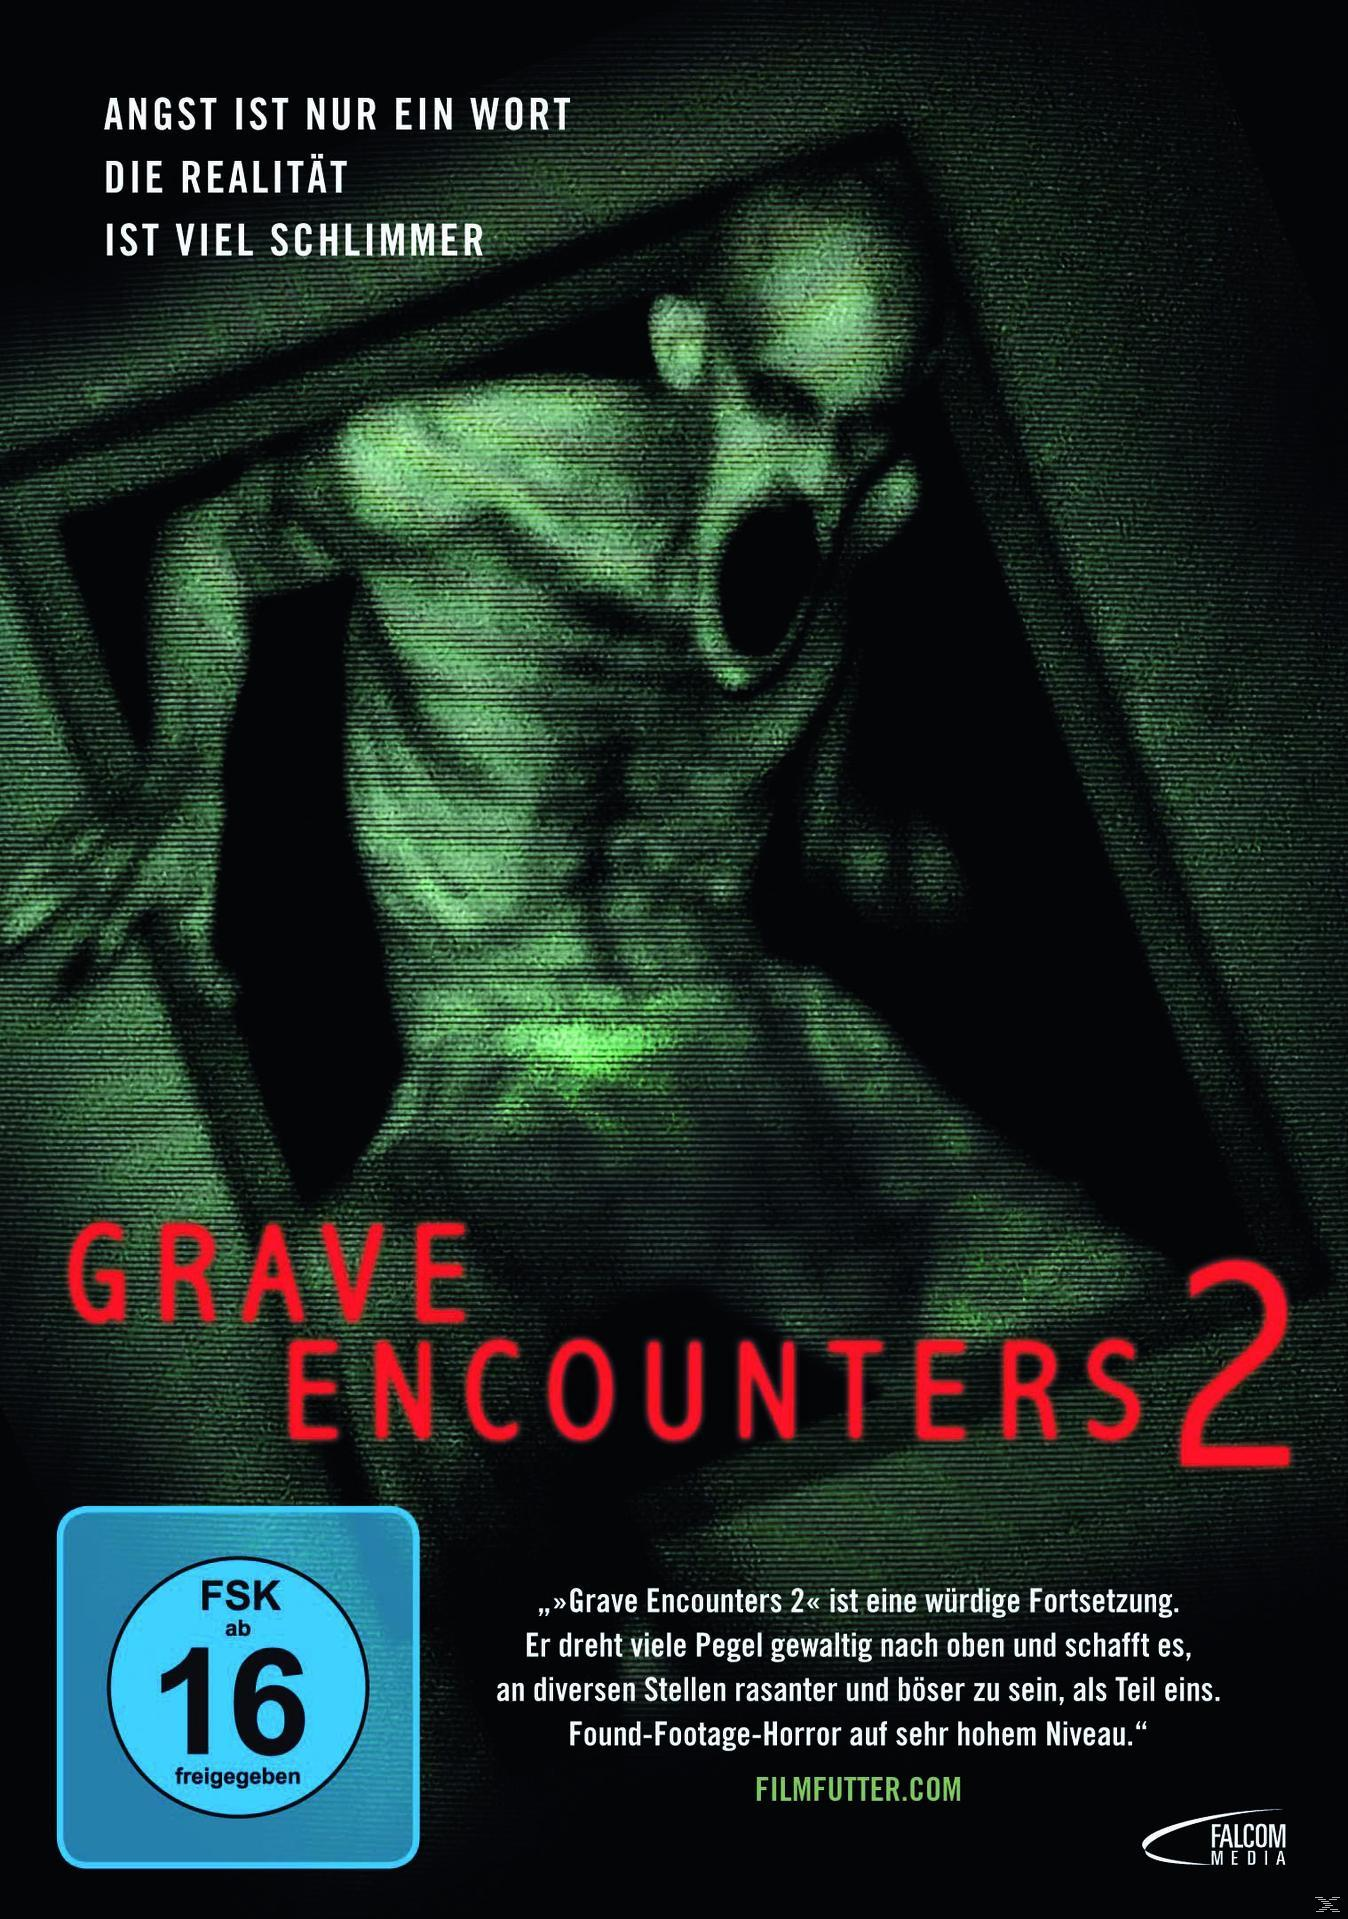 Grave Encounters 2 DVD